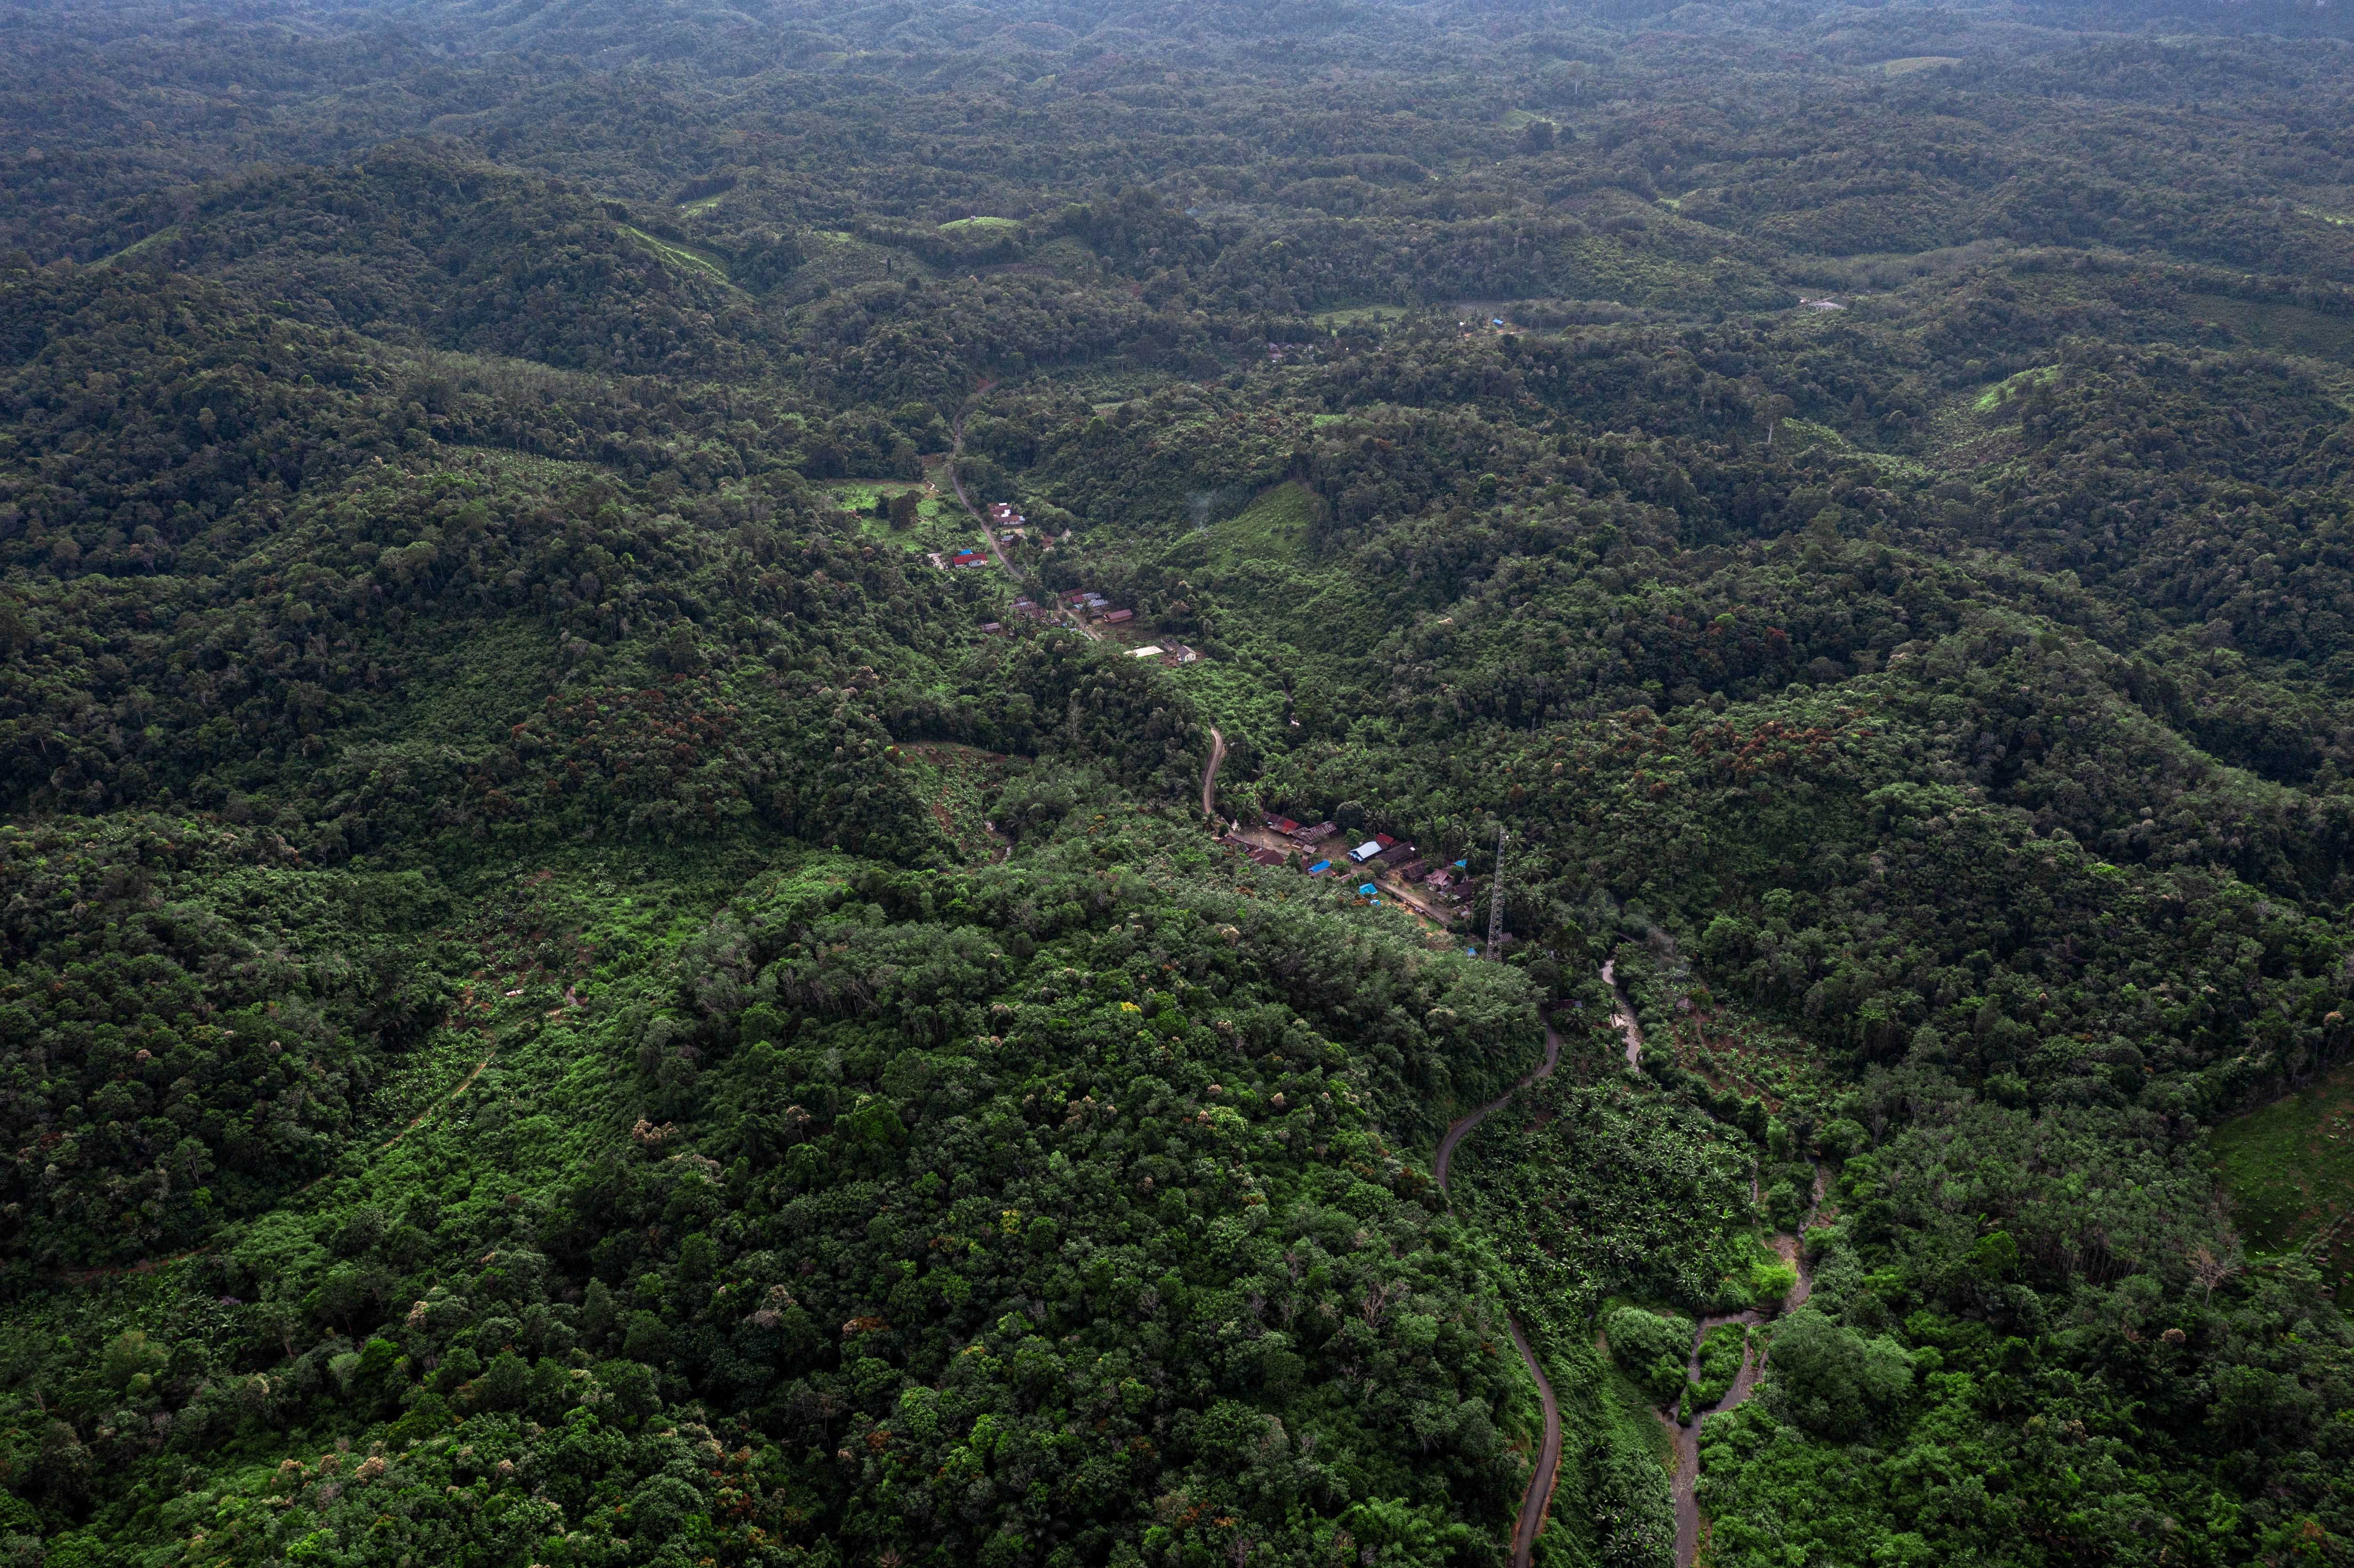 Foto udara lanskap permukiman suku Dayak Pitap yang dikelilingi perkebunan, ladang, serta hutan adat di kawasan pegunungan Meratus.